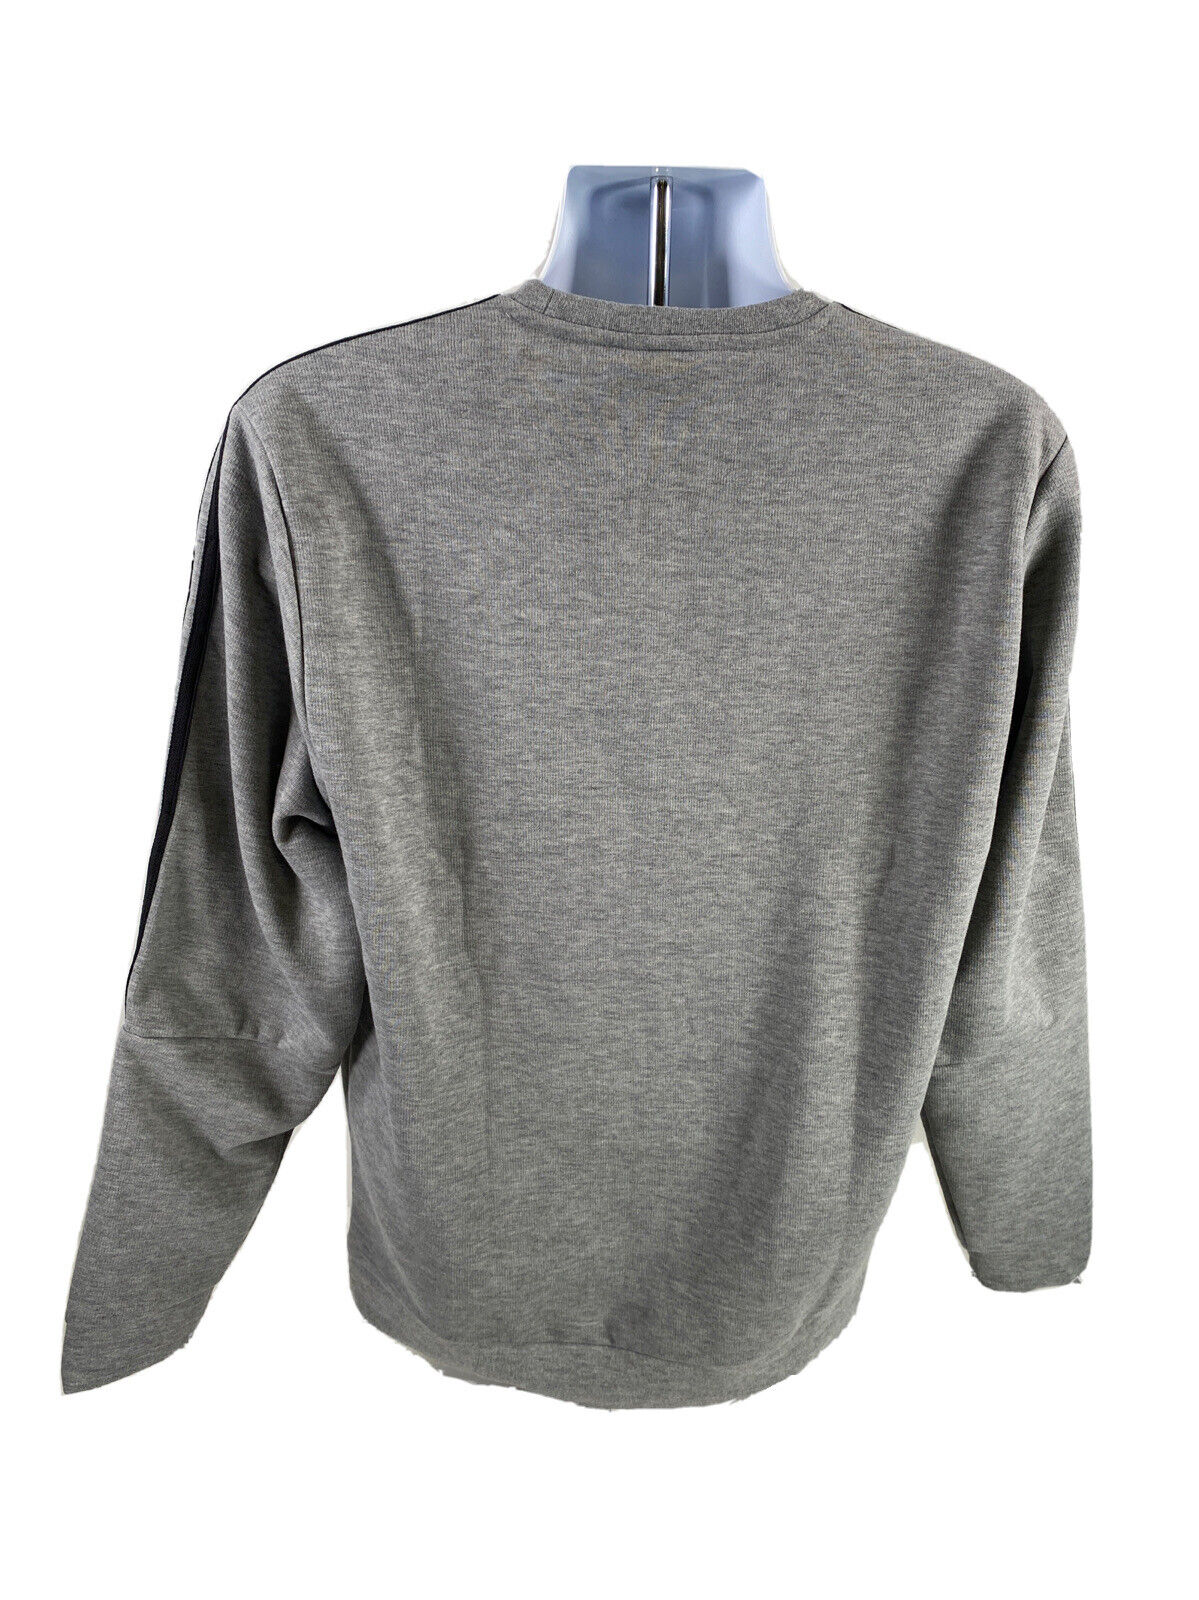 Adidas Men's Gray Long Sleeve Crewneck Sweatshirt - M